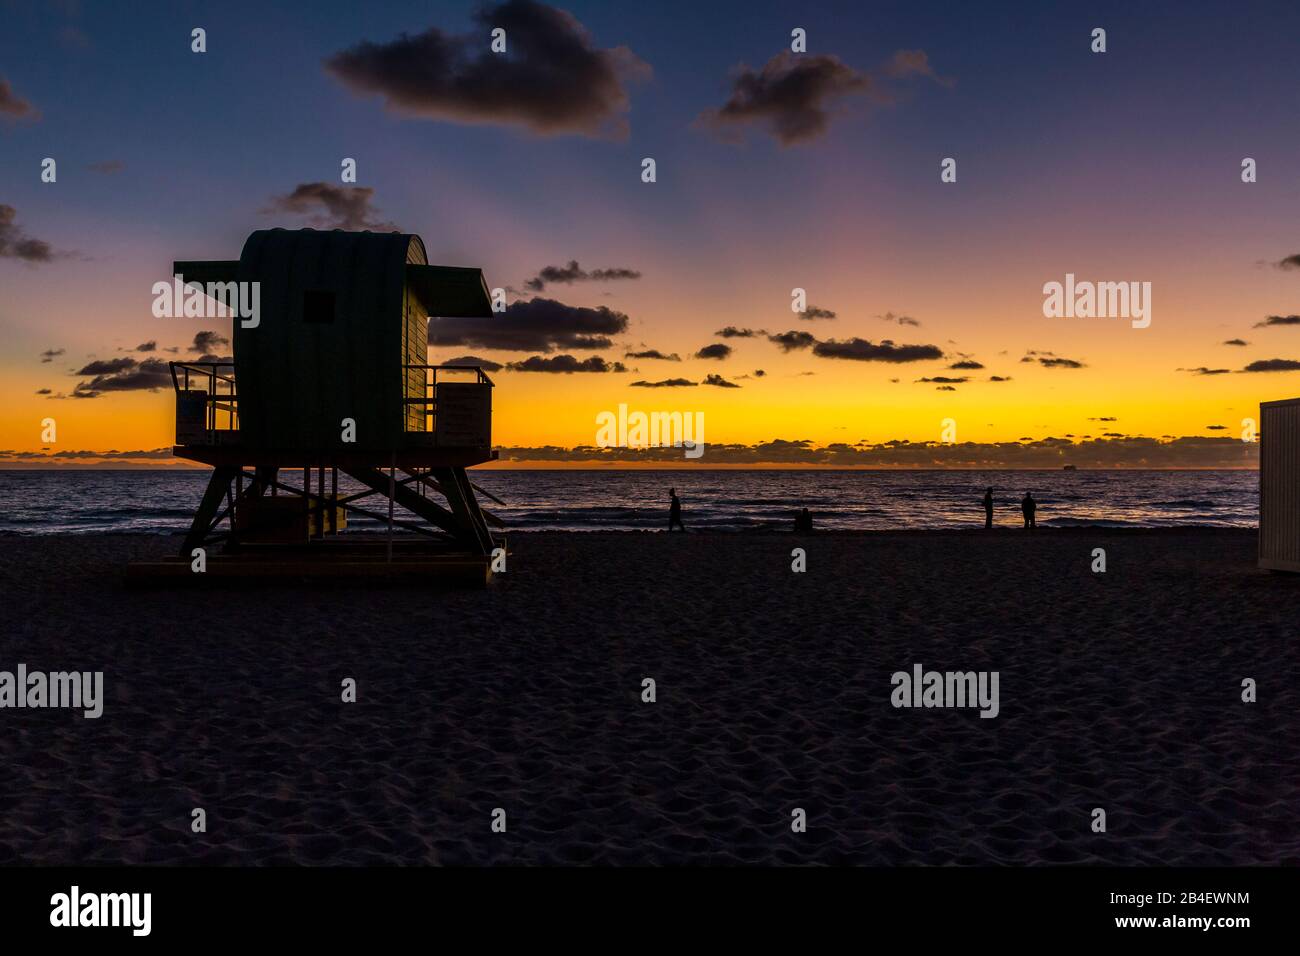 Baywatch Häuschen, Sonnenaufgang, Miami Beach, Florida, USA, Nordamerika Stock Photo